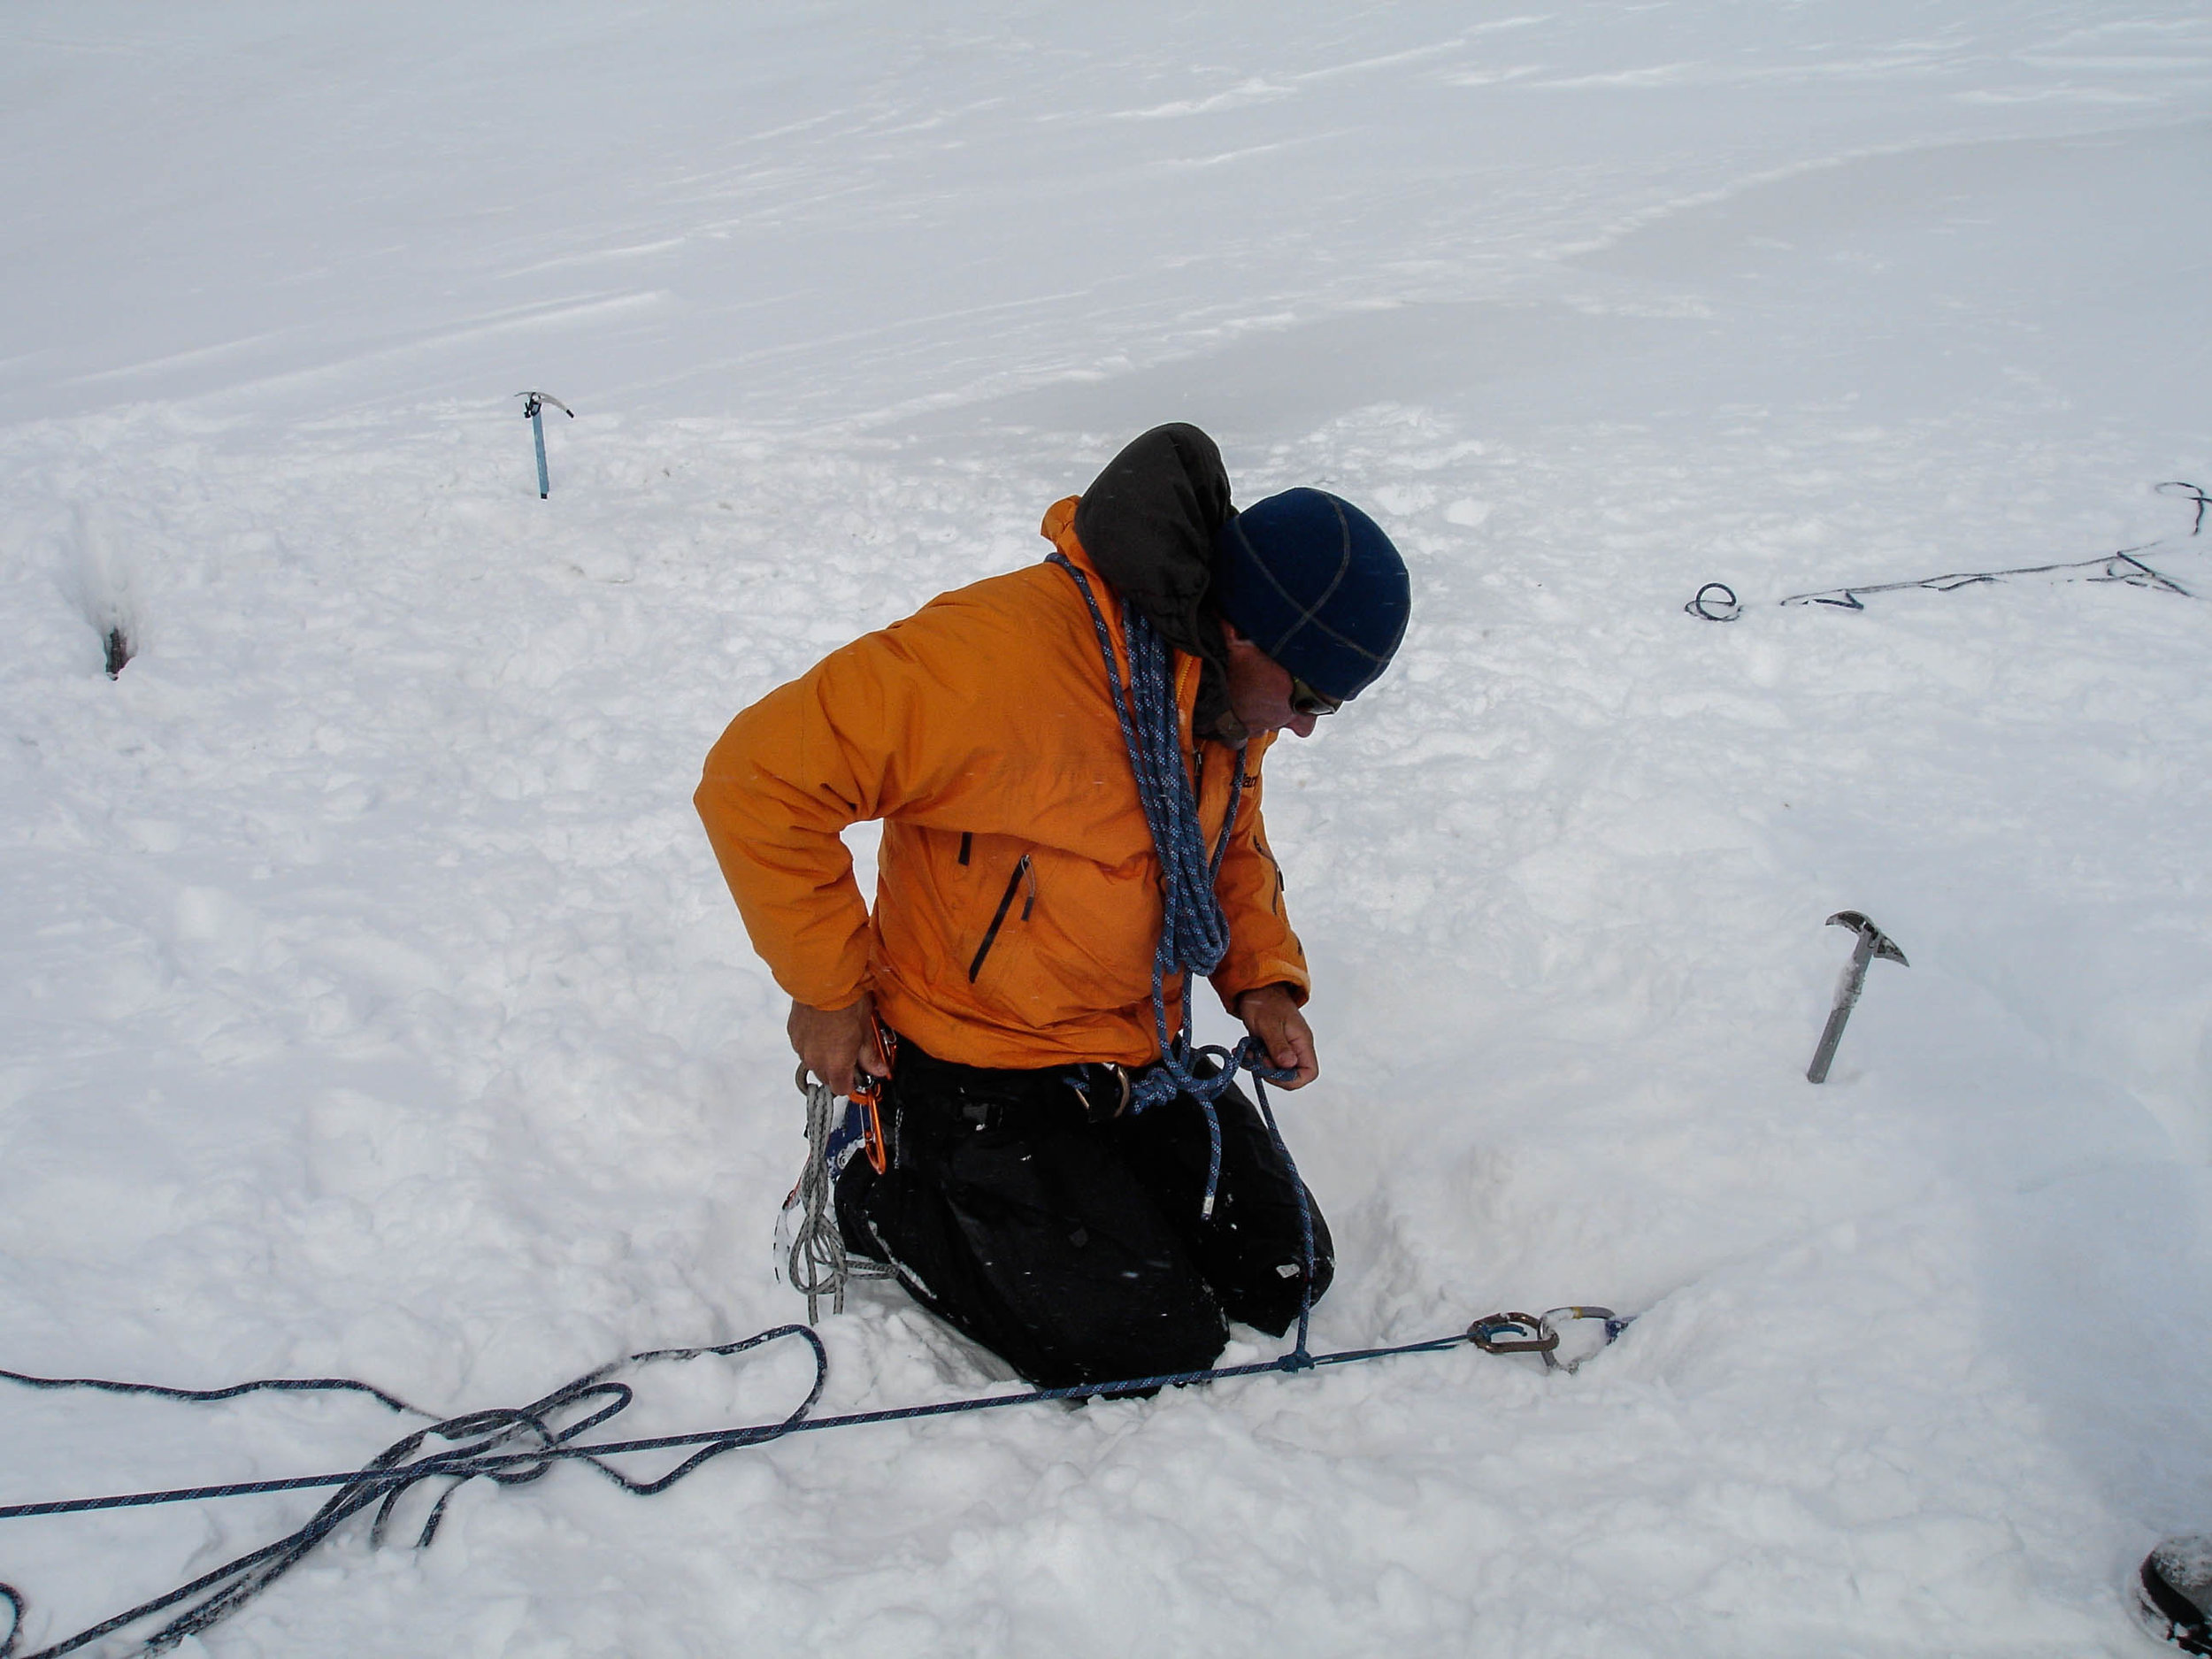 Creavsse rescue on skis practice